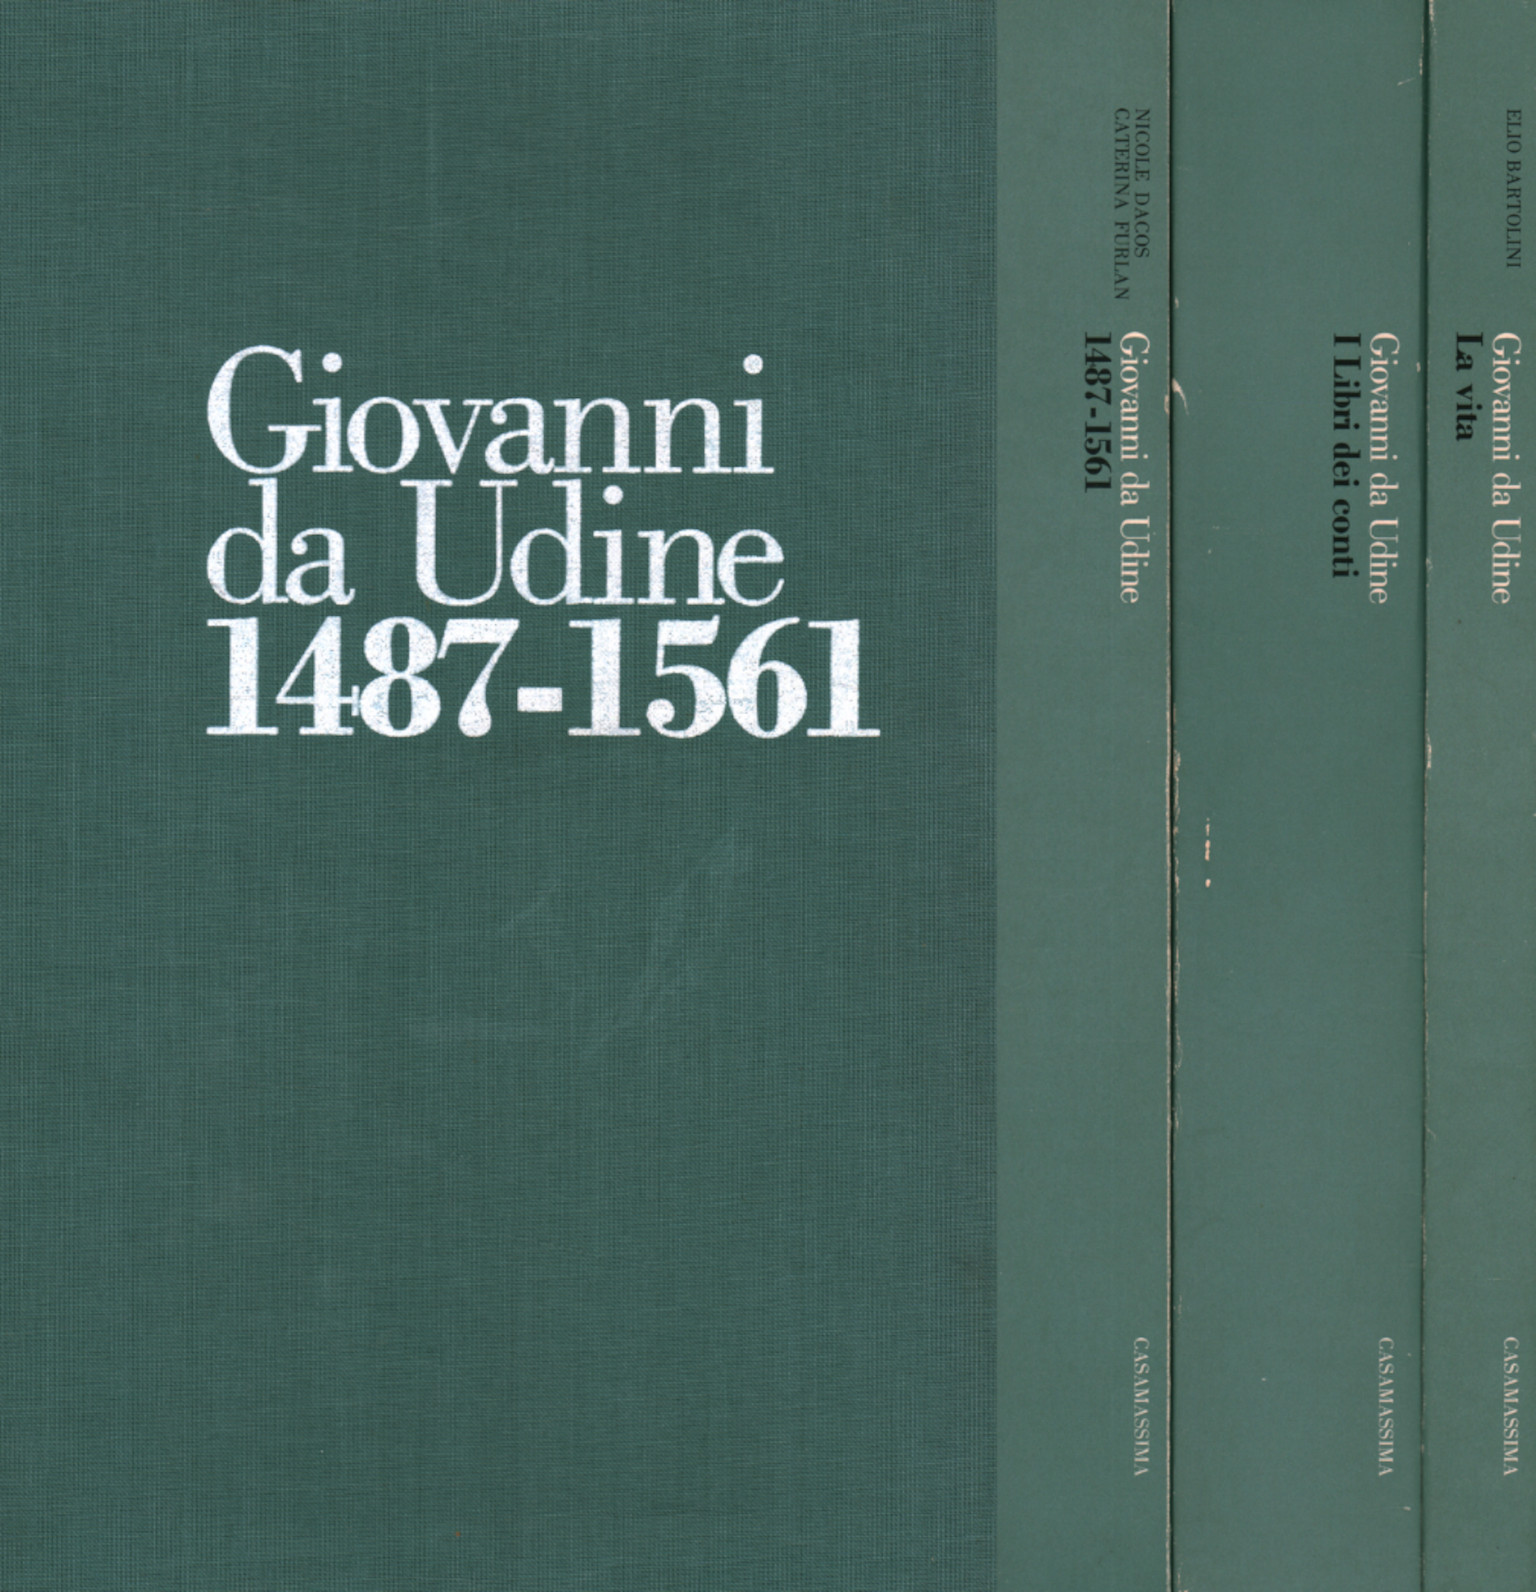 Jean d'Udine (3 volumes)